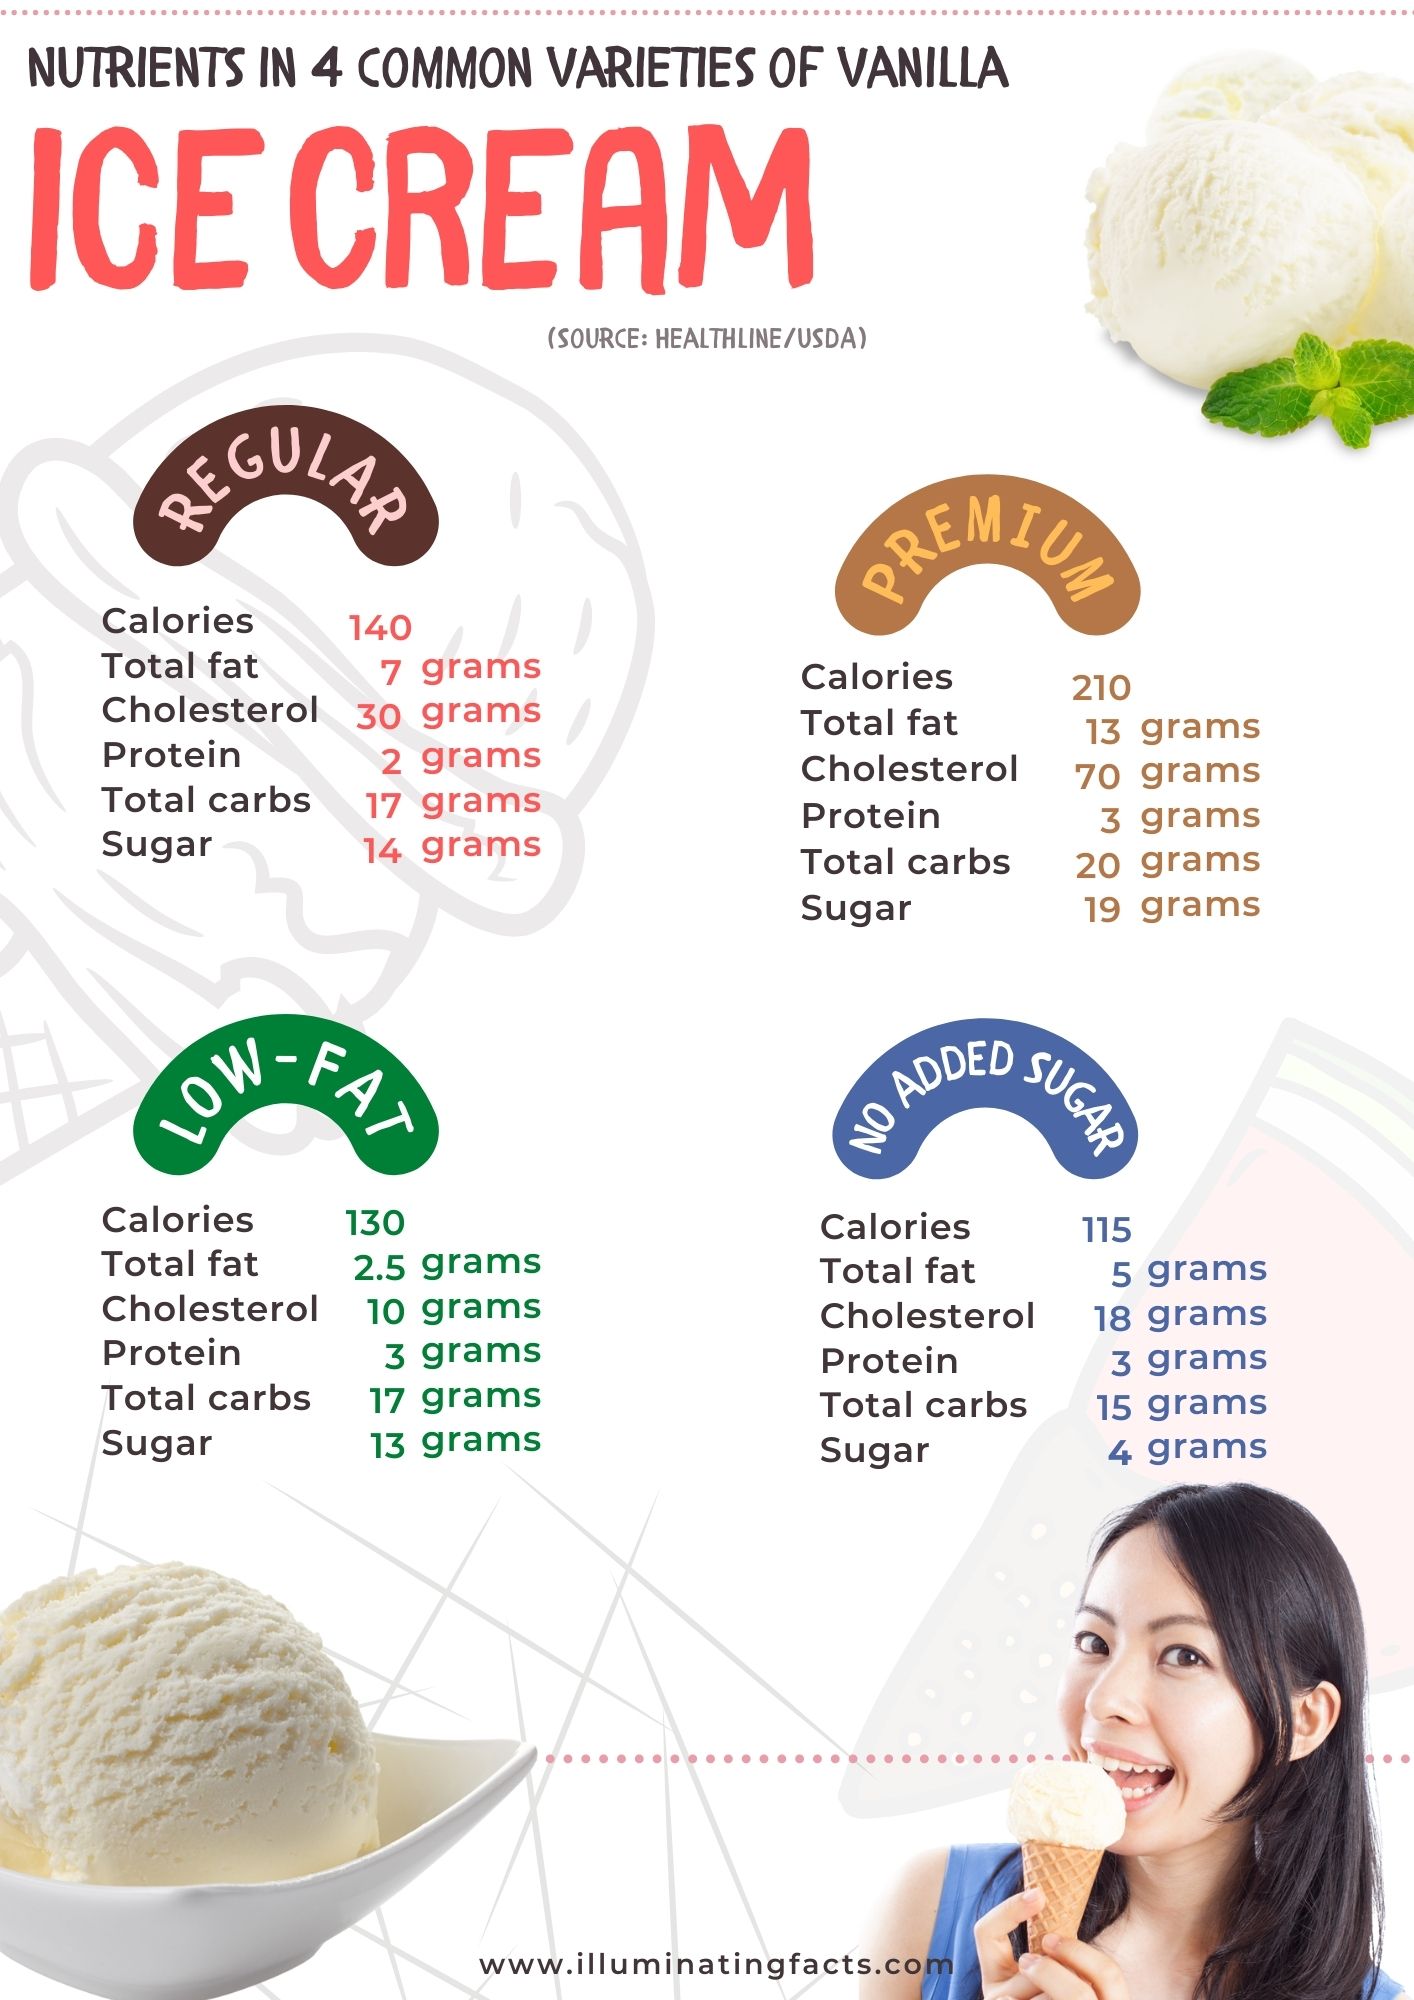 Nutrients in 4 common varieties of vanilla ice cream